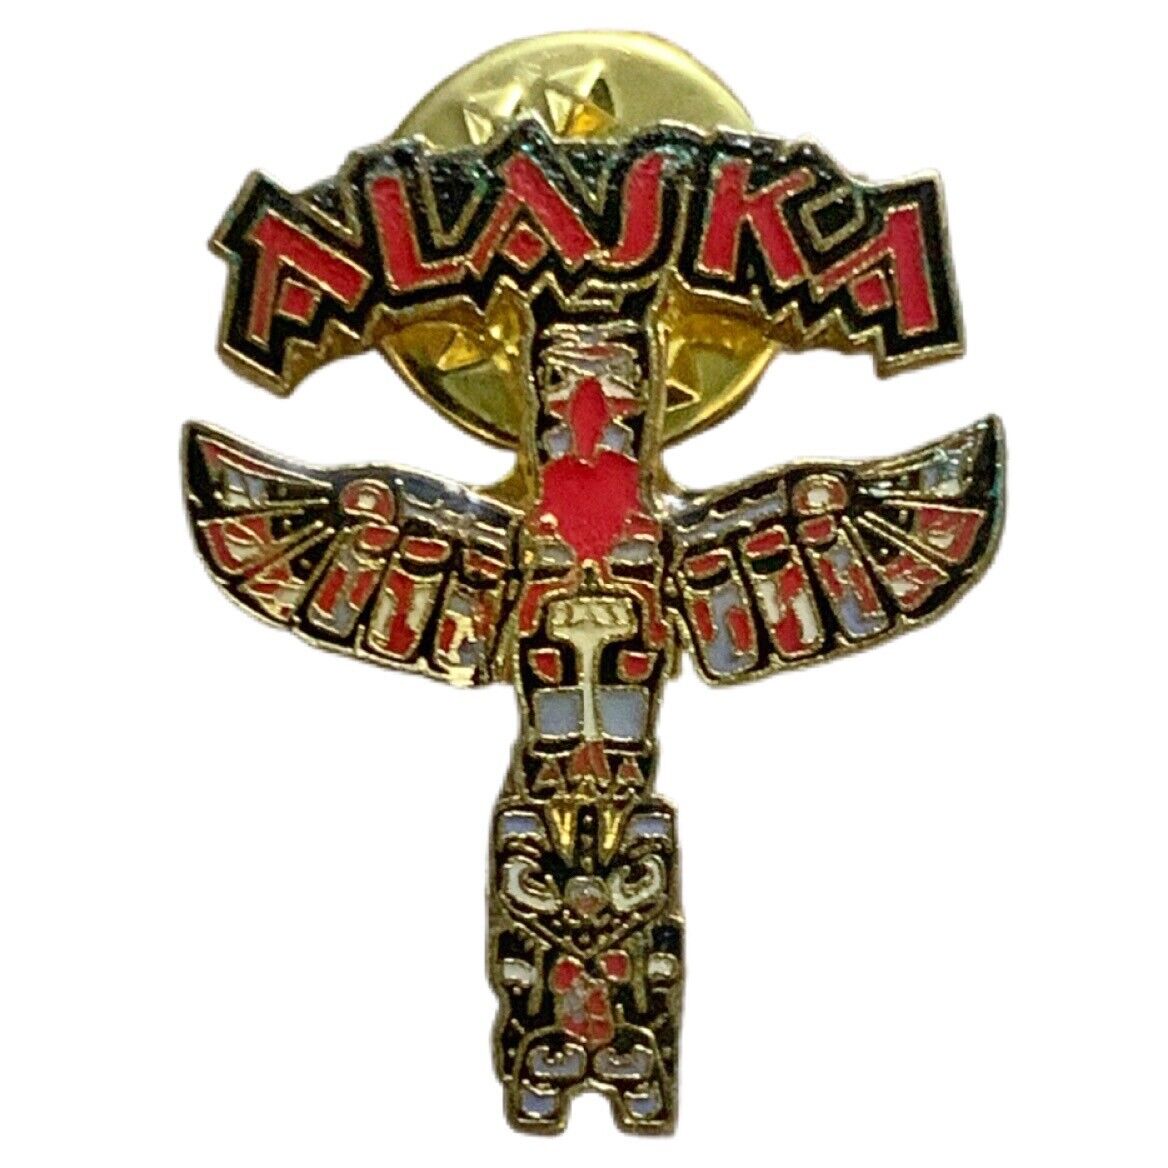 Vintage Alaska Totem Pole Travel Souvenir Pin